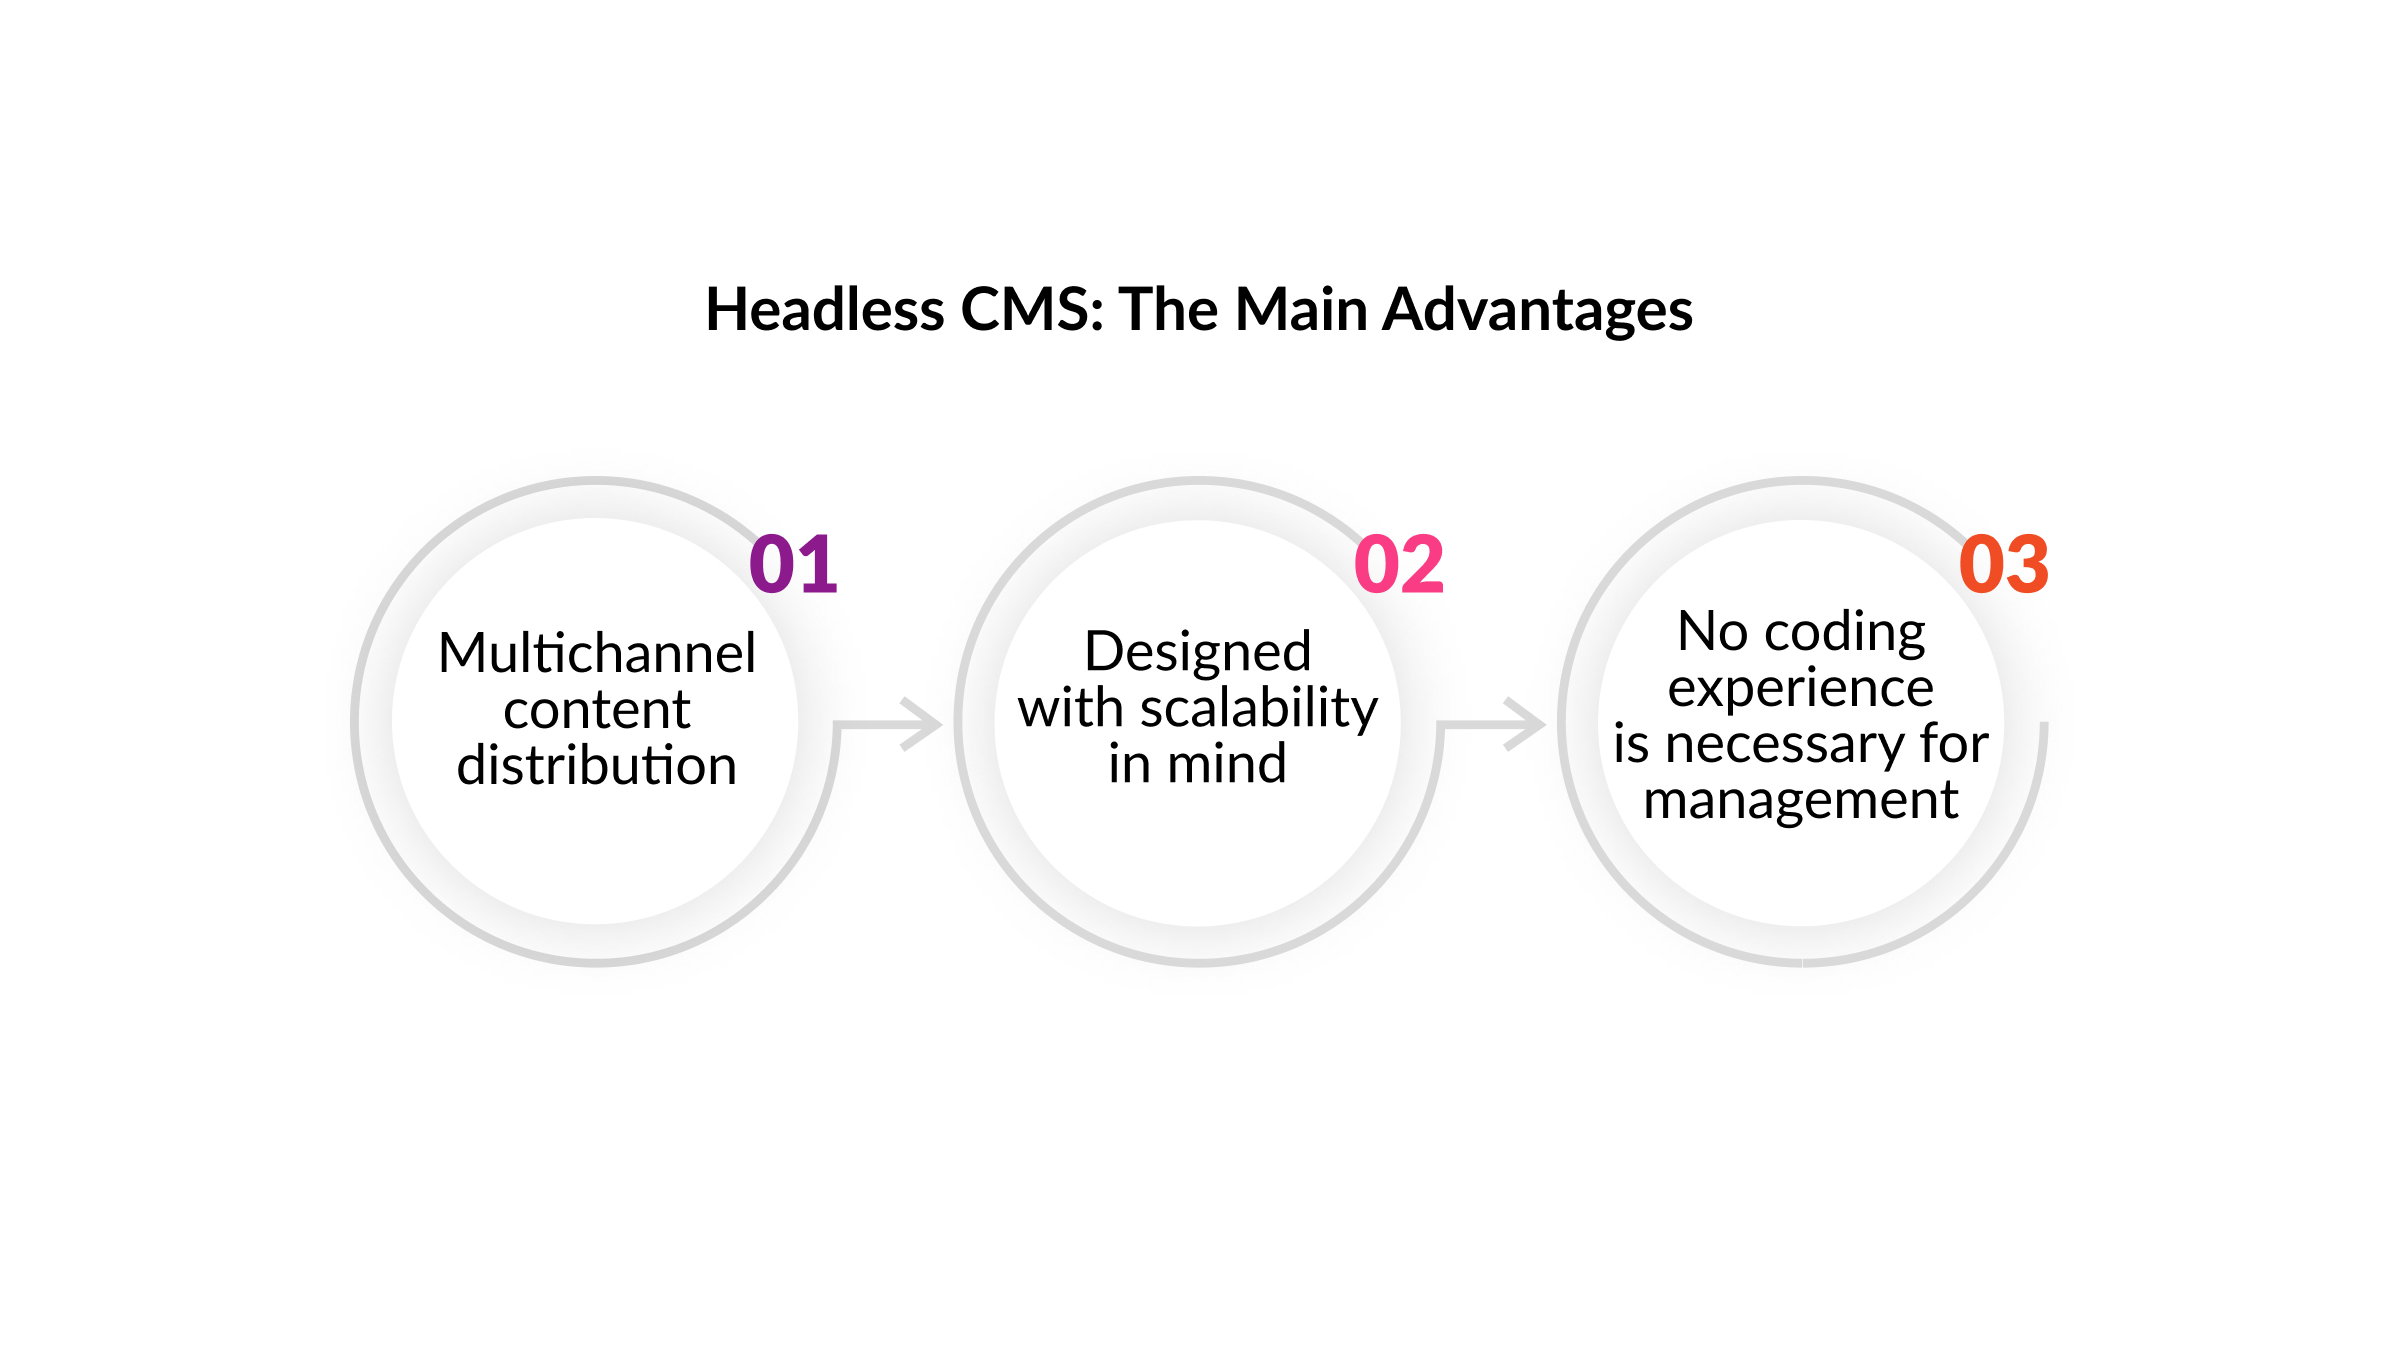 headless CMS advantages